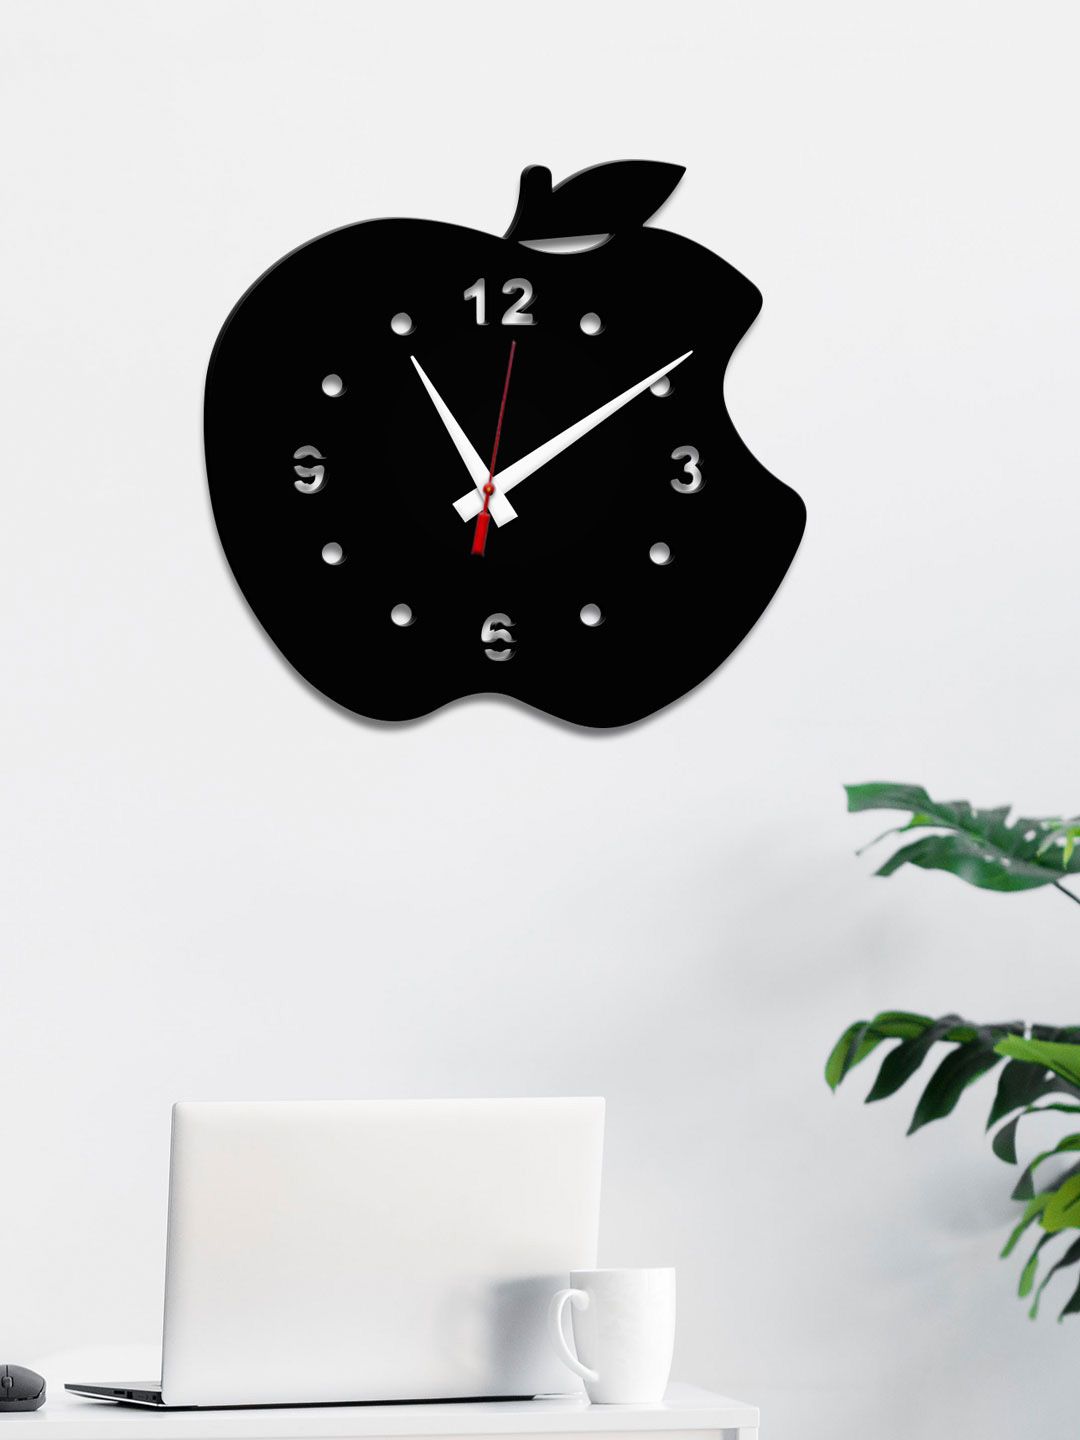 WALLMANTRA Black & White Quirky Contemporary Wall Clock Price in India